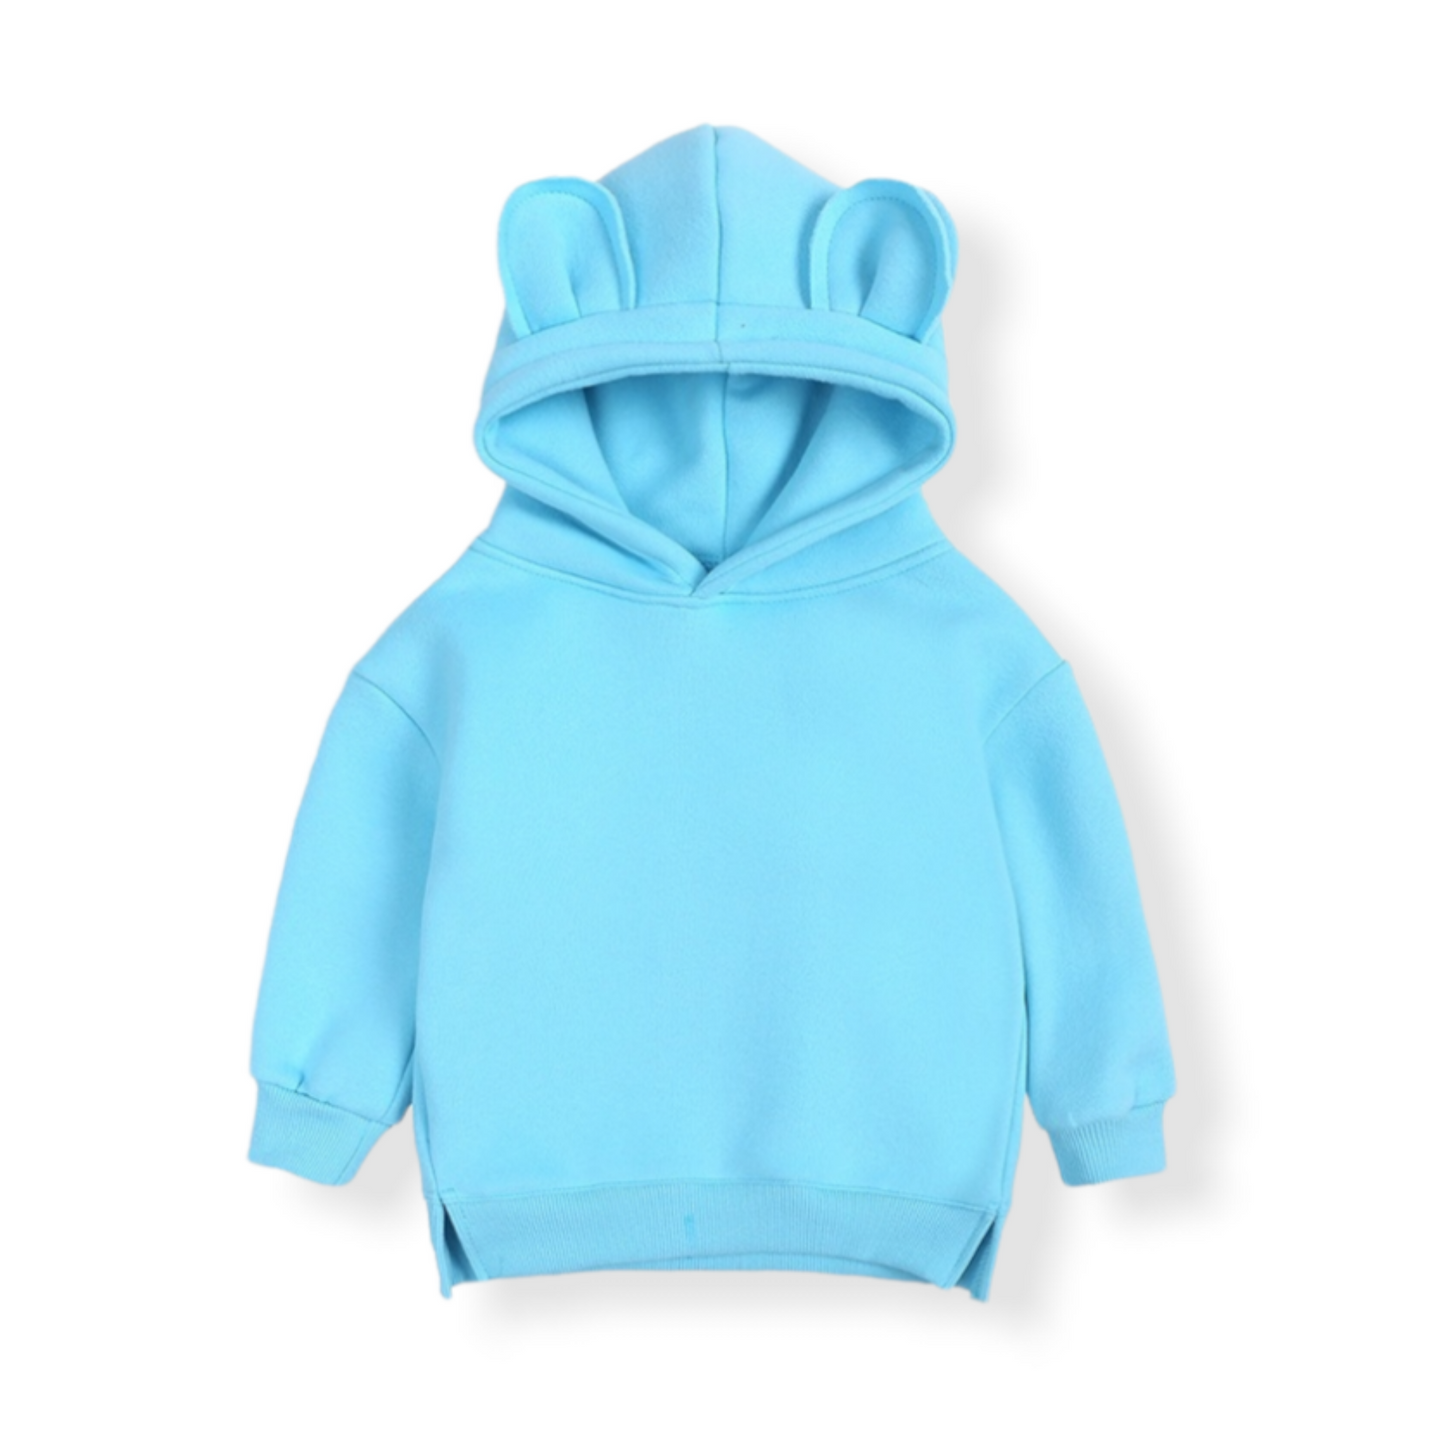 blue kid's hoodie with ears on the hood - Hunny Bubba Kids